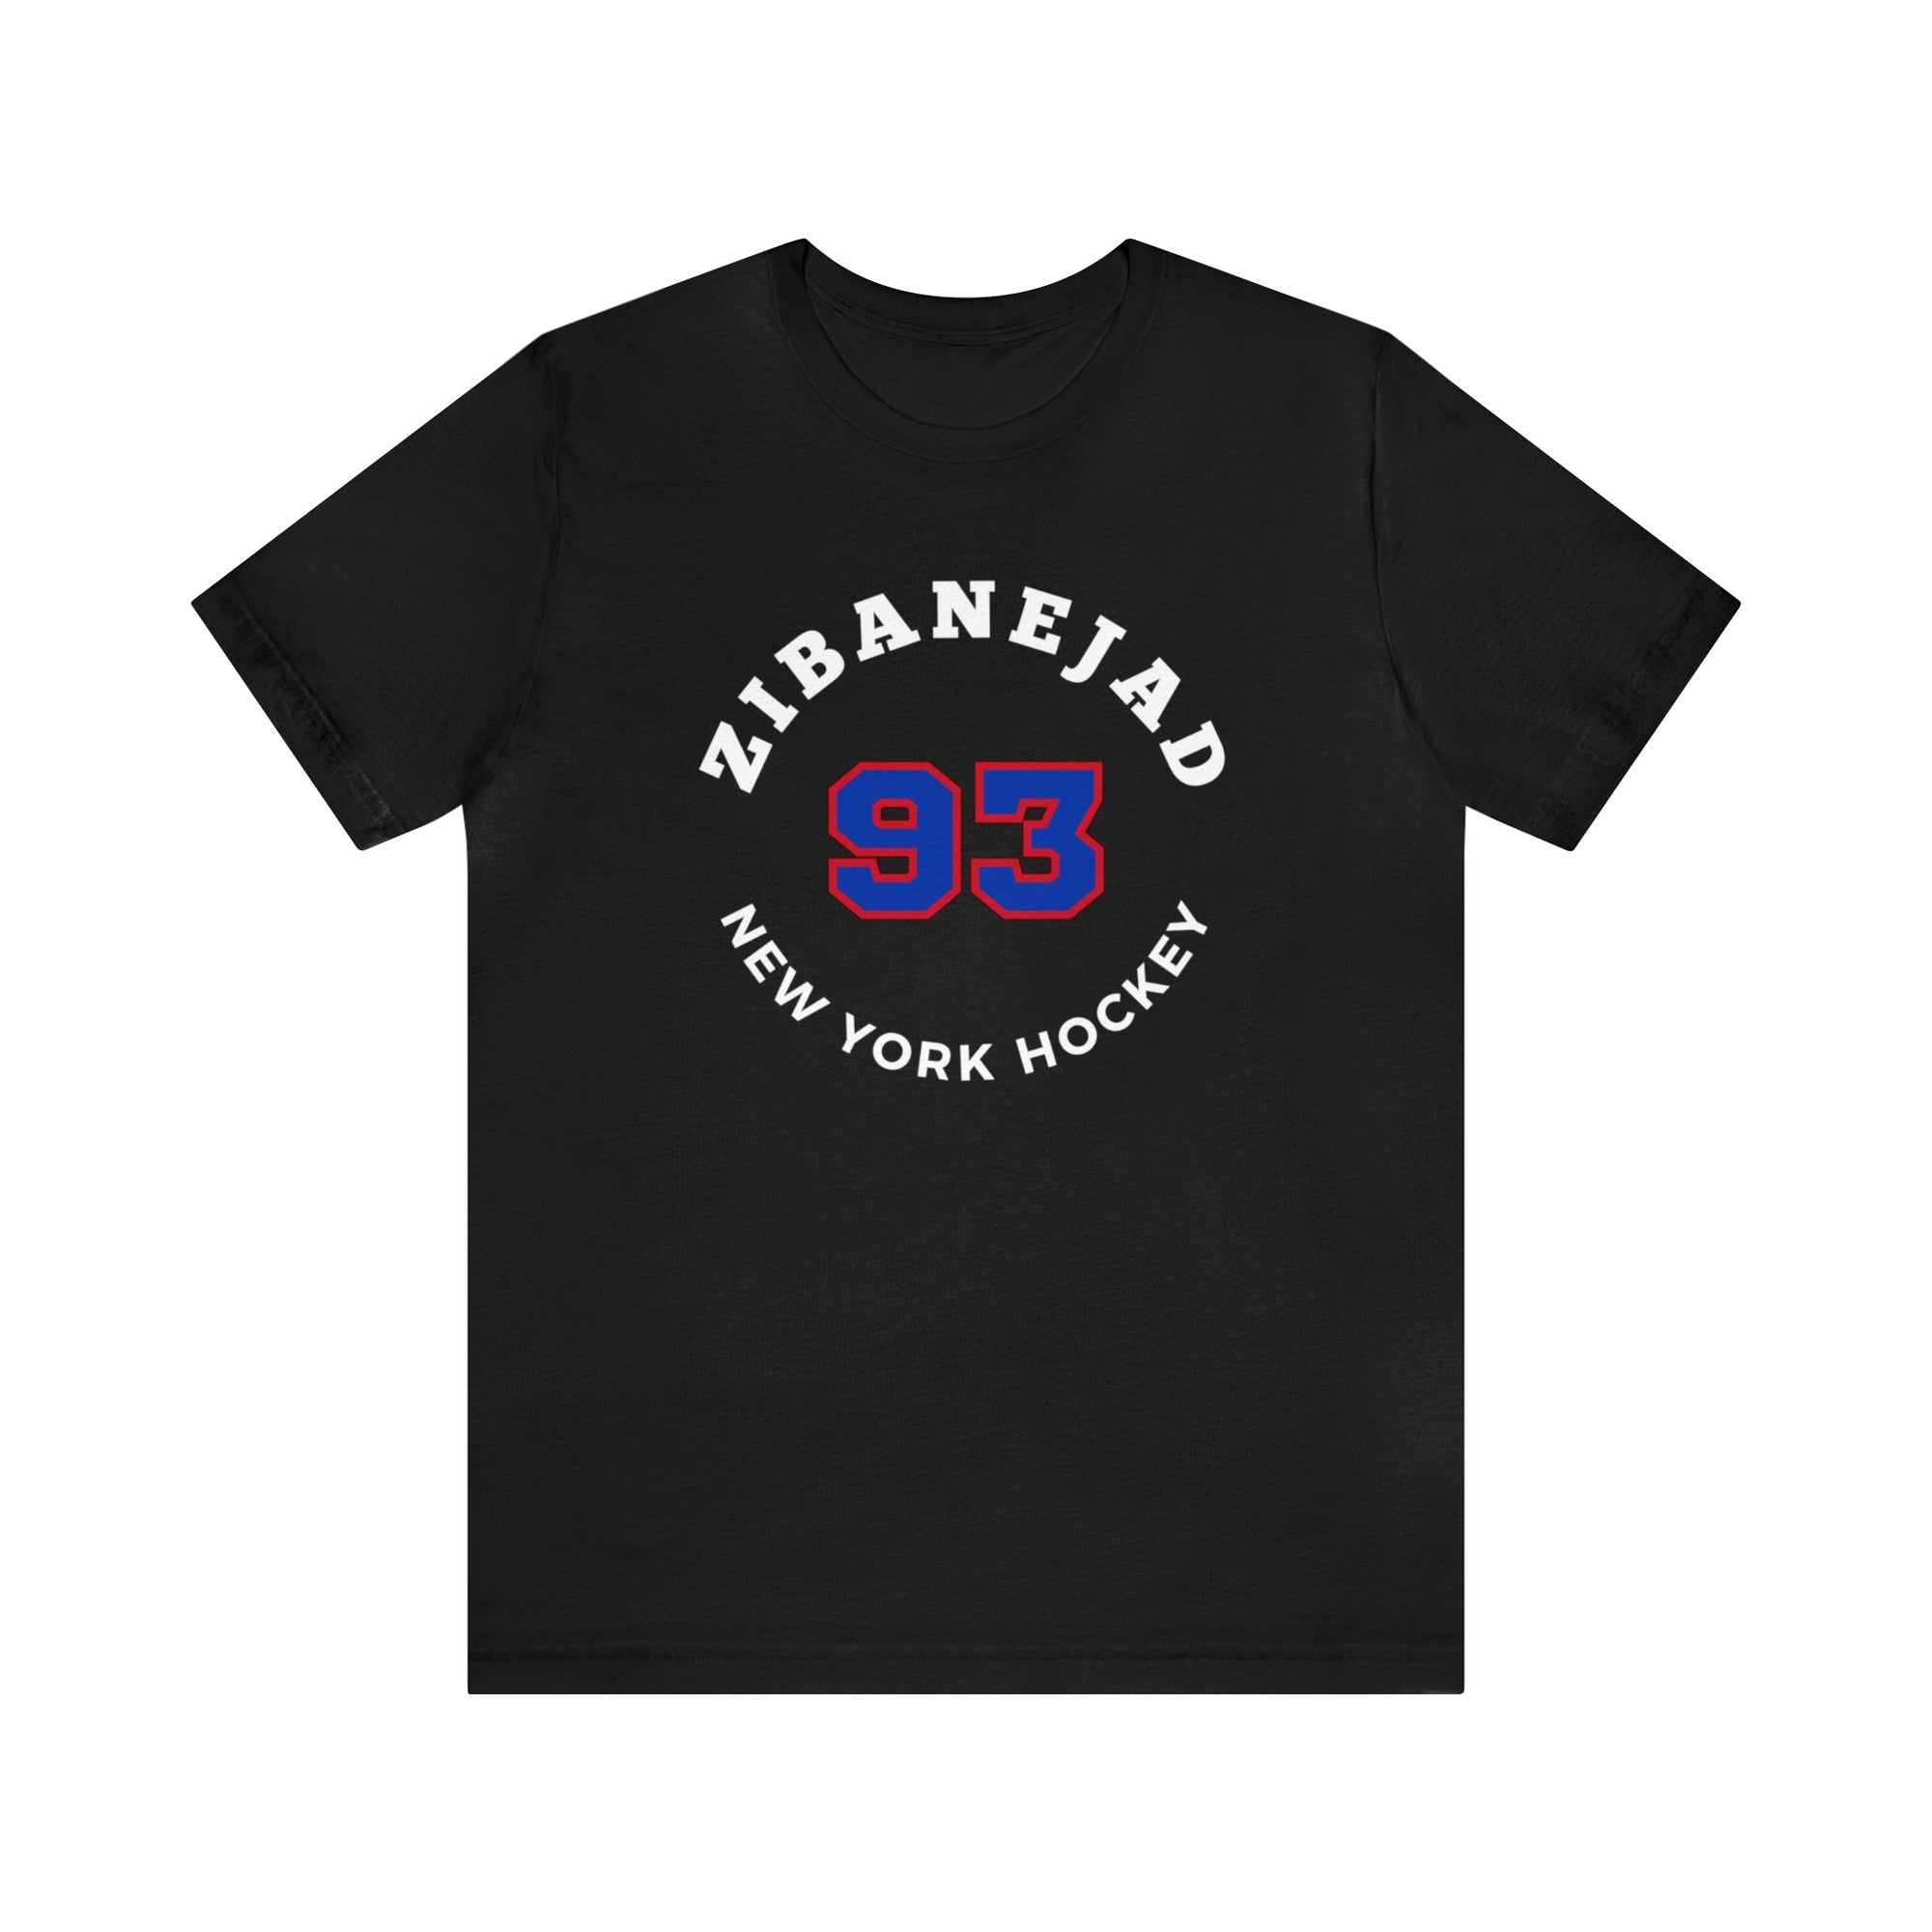 Zibanejad 93 New York Hockey Number Arch Design Unisex T-Shirt